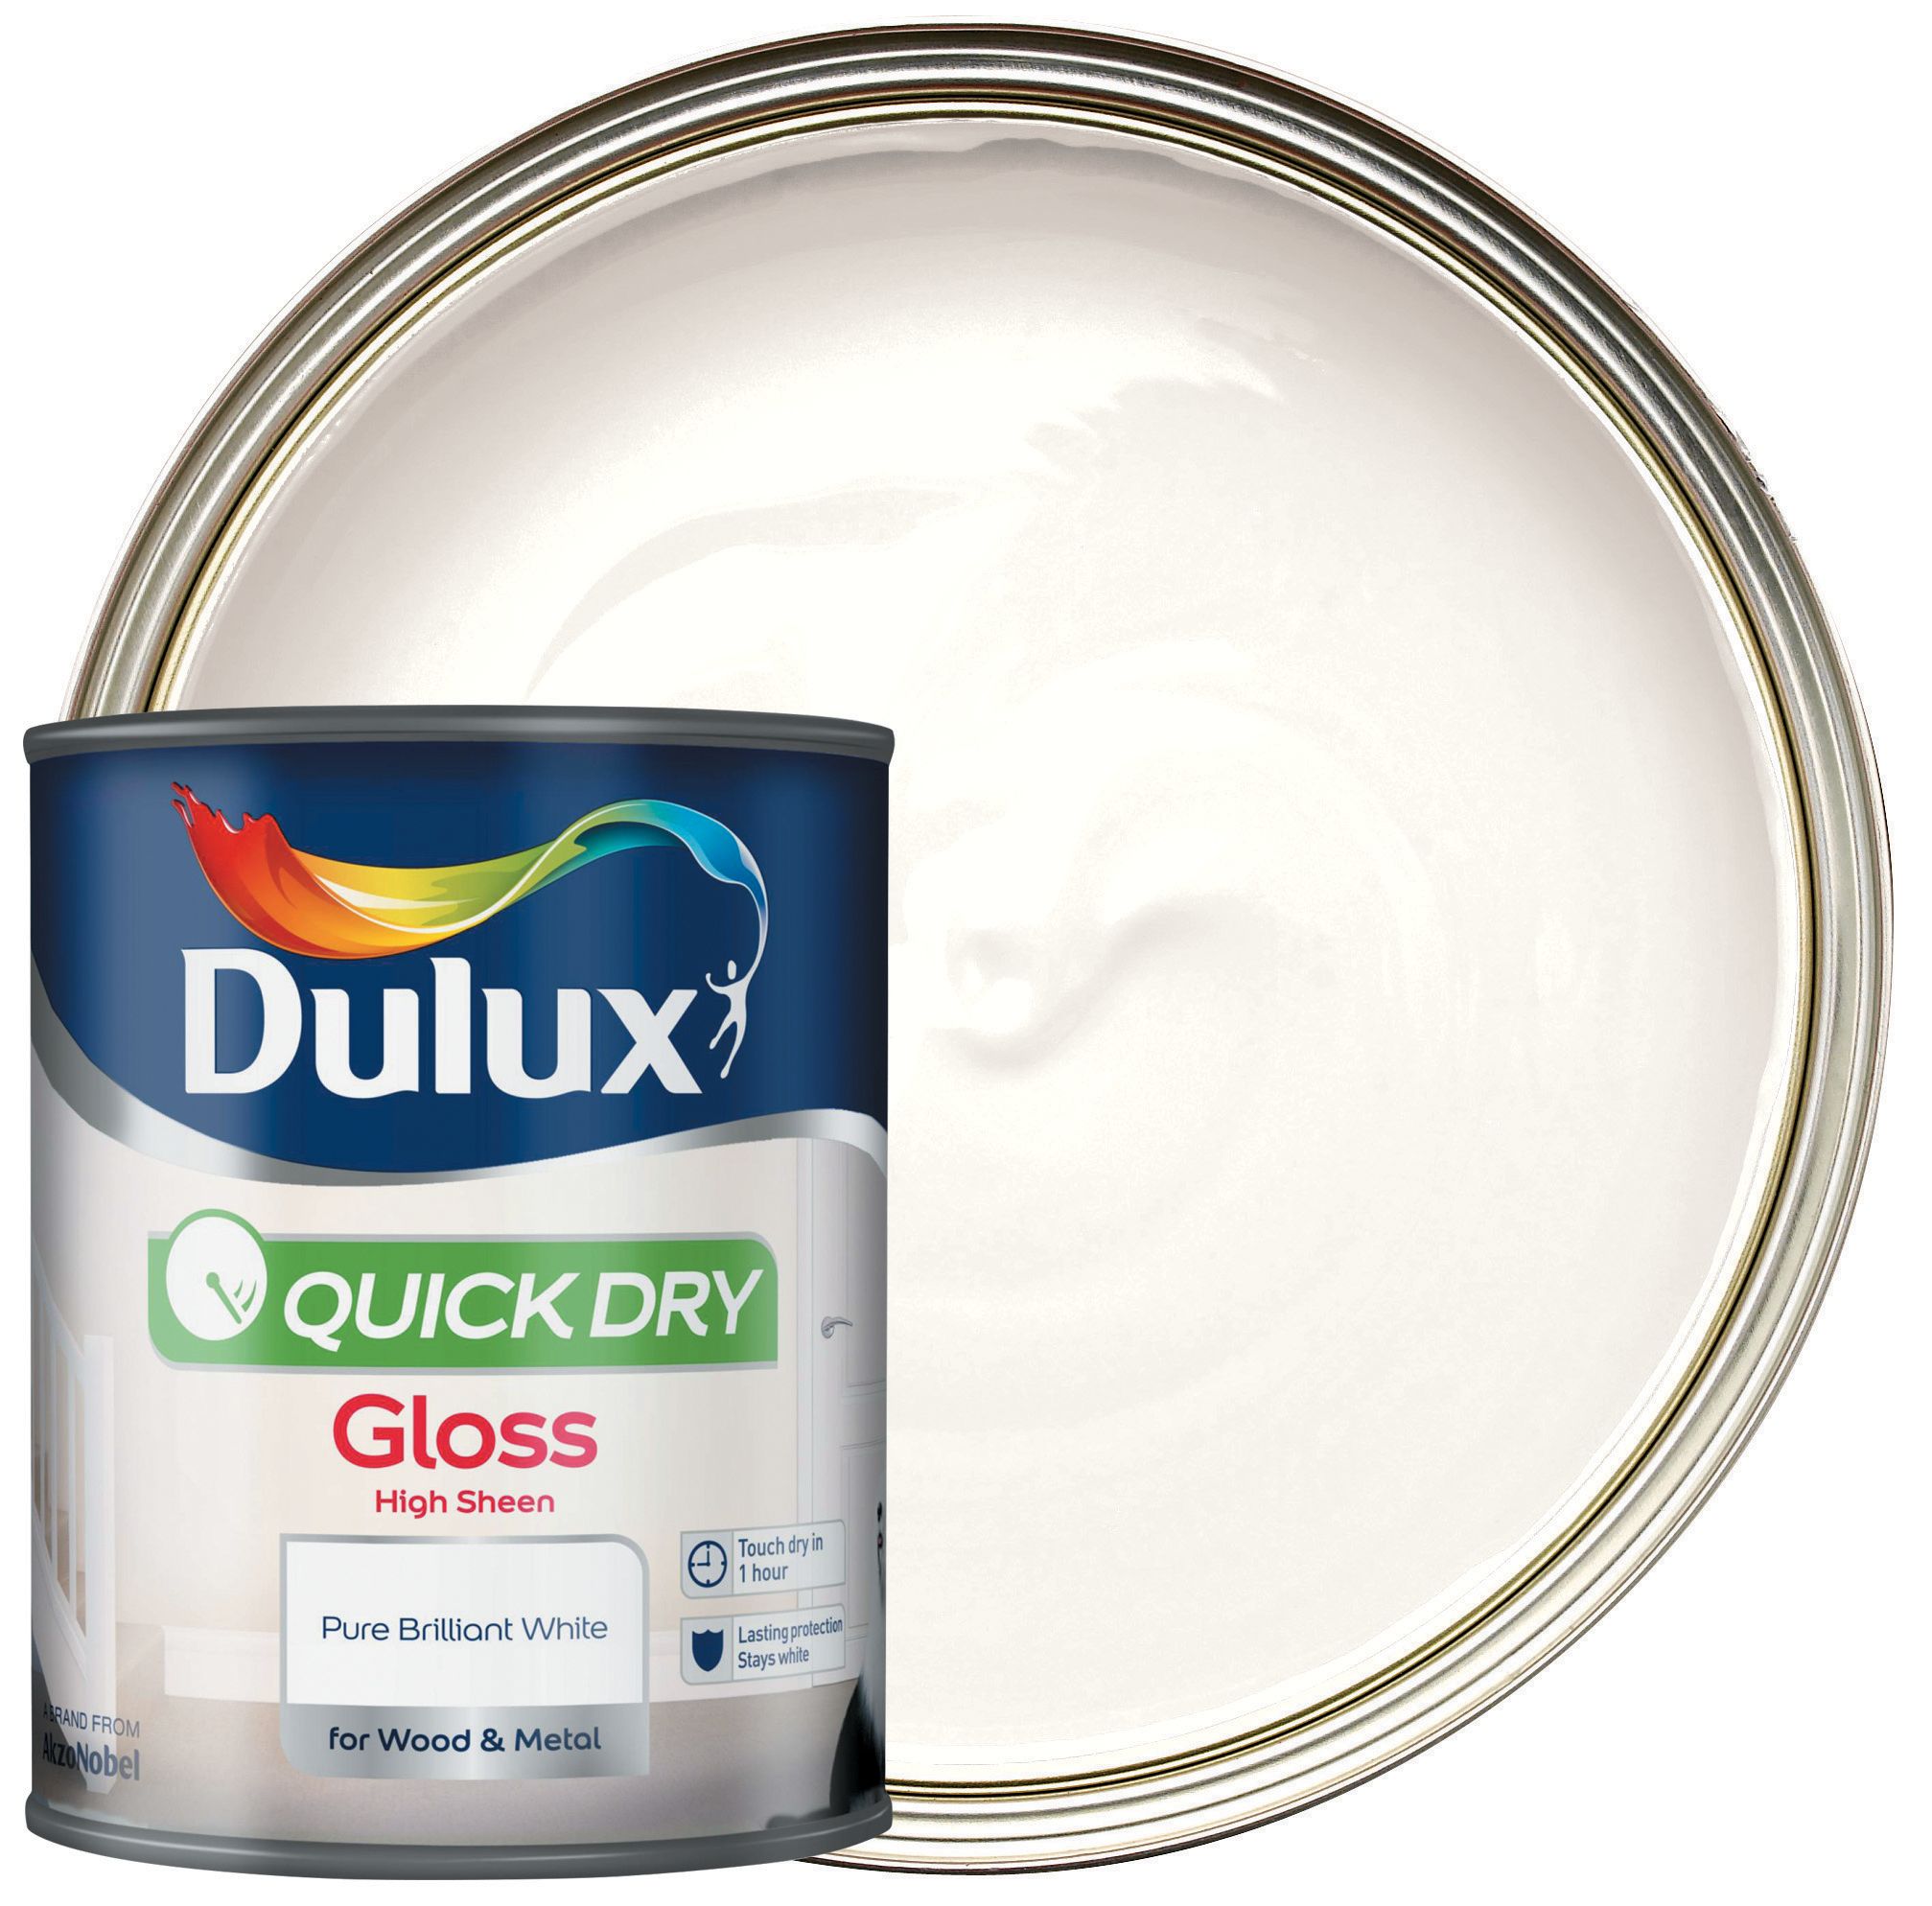 Dulux Quick Dry Gloss Paint - Paint Pure Brilliant White - 750ml